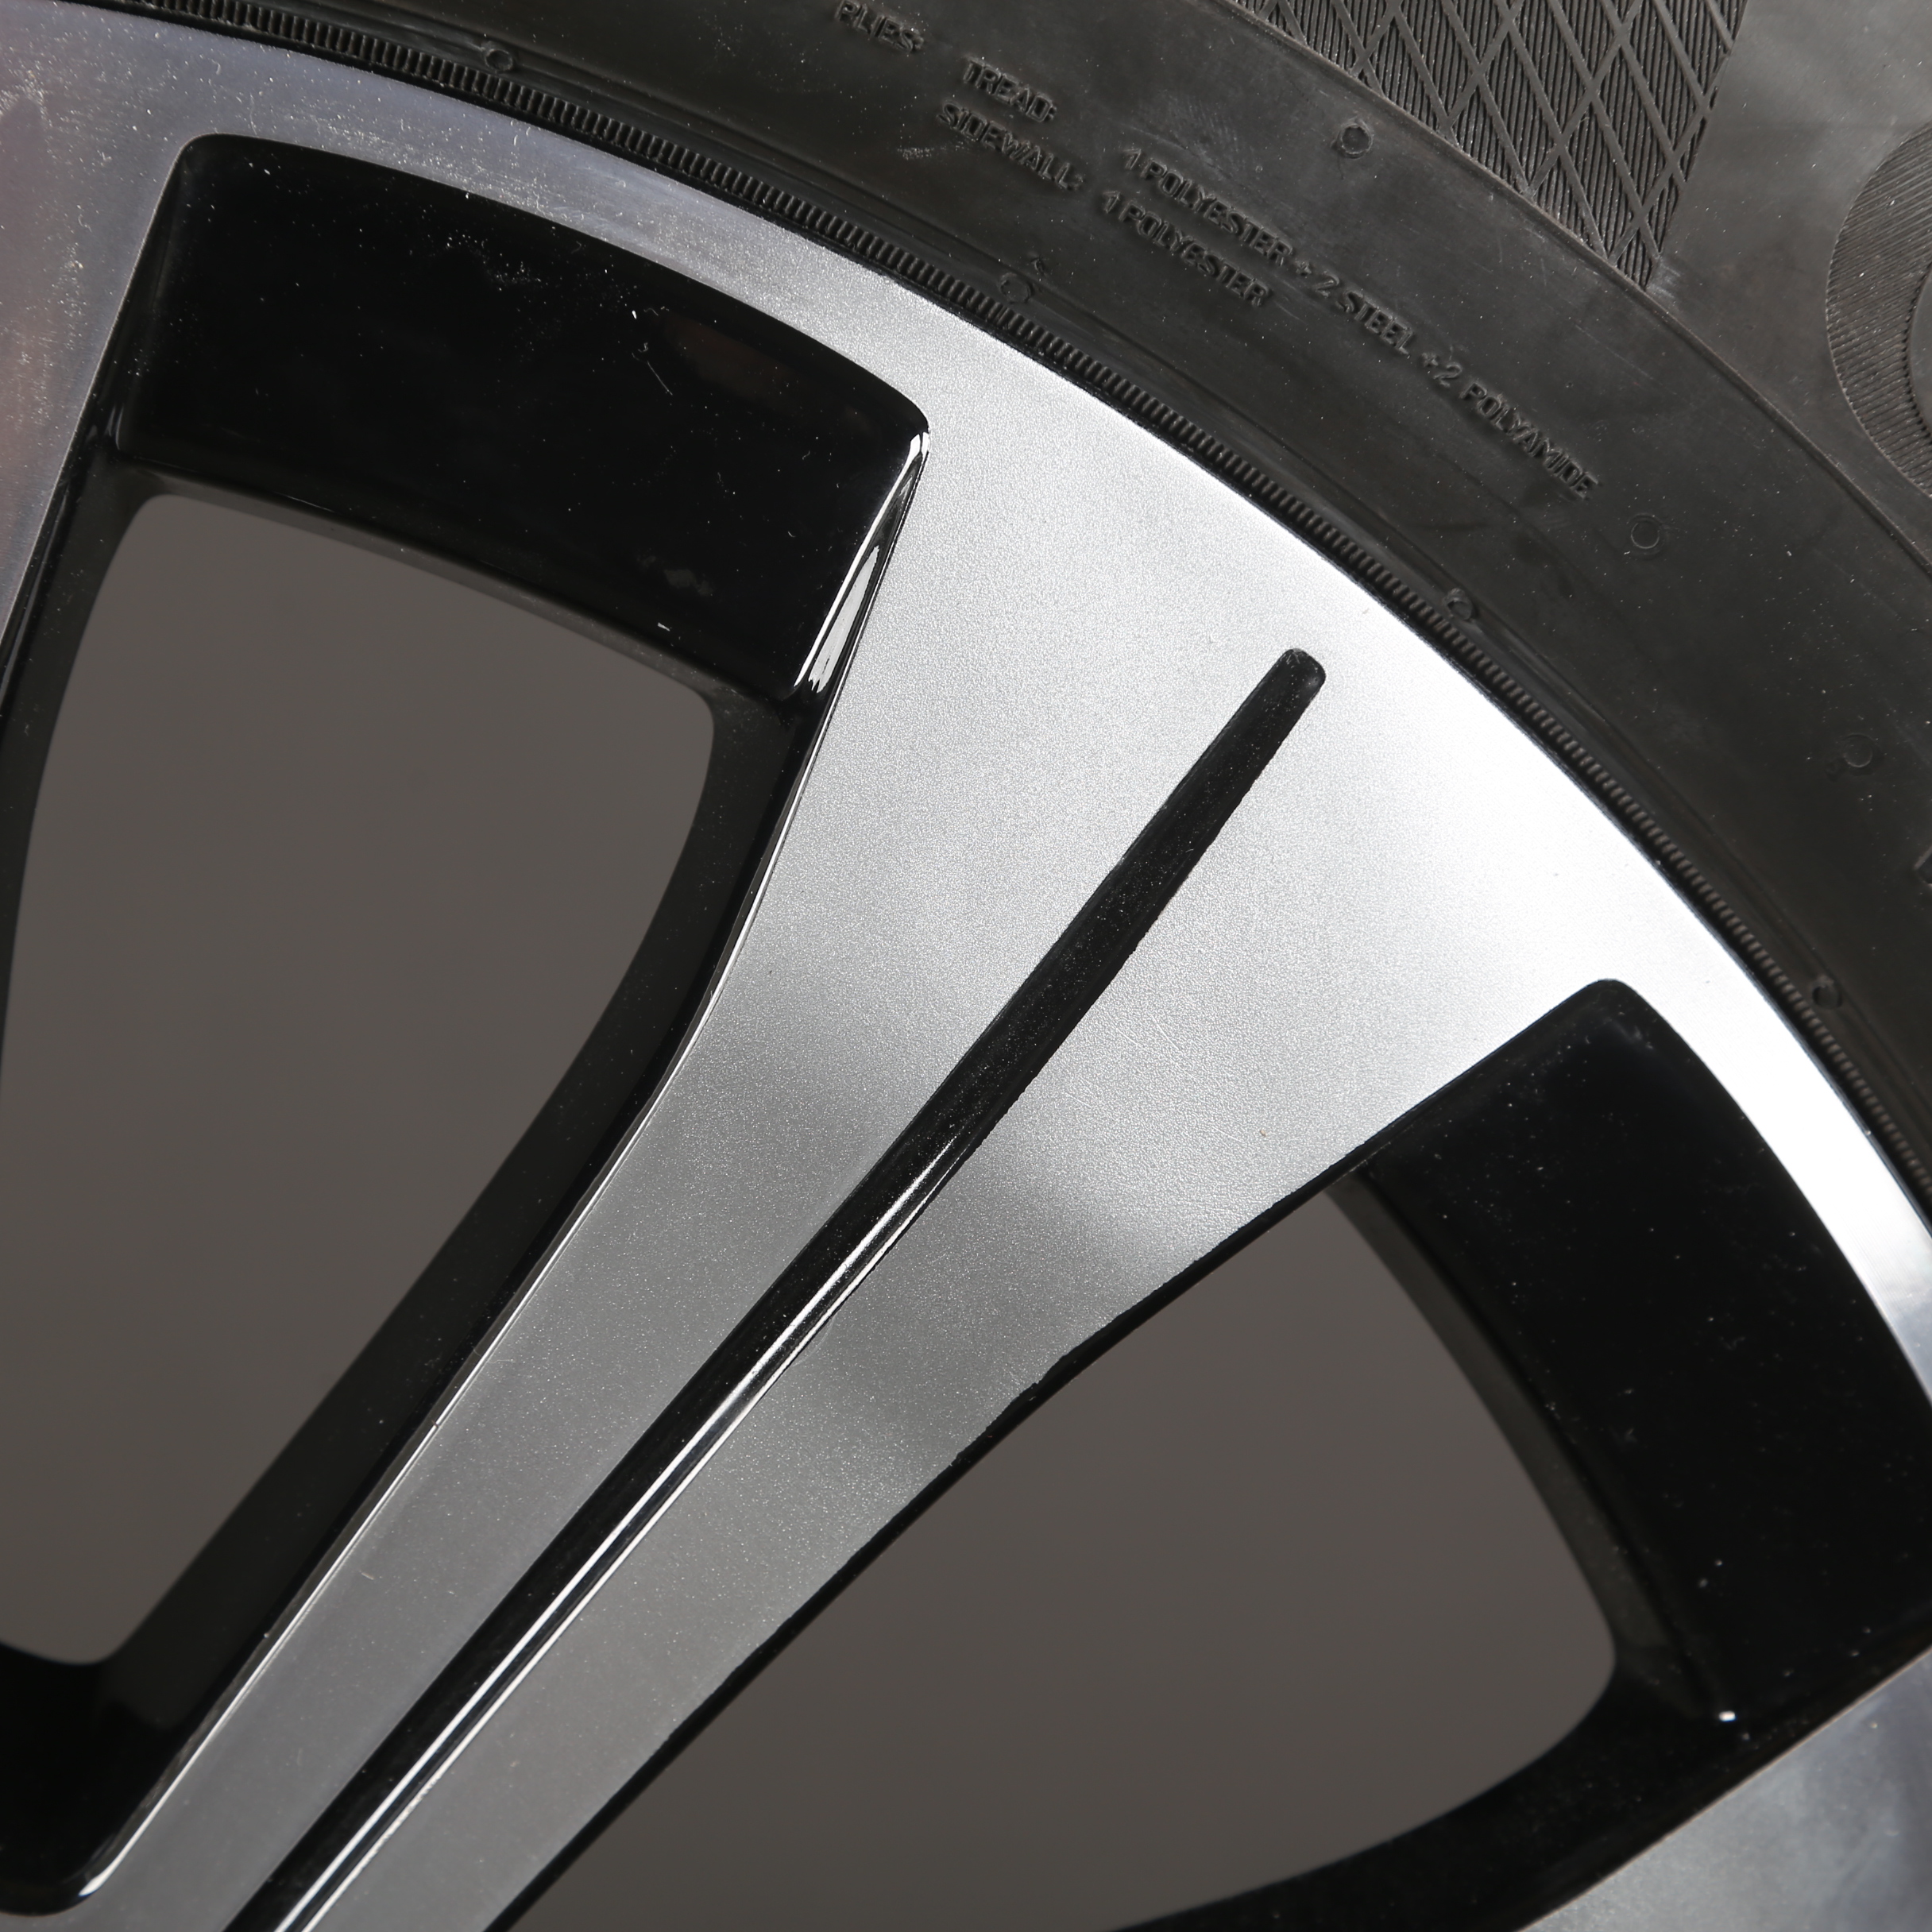 18 pouces roues d'hiver d'origine Mercedes EQB X243 EQA H243 A2434010000 pneus d'hiver